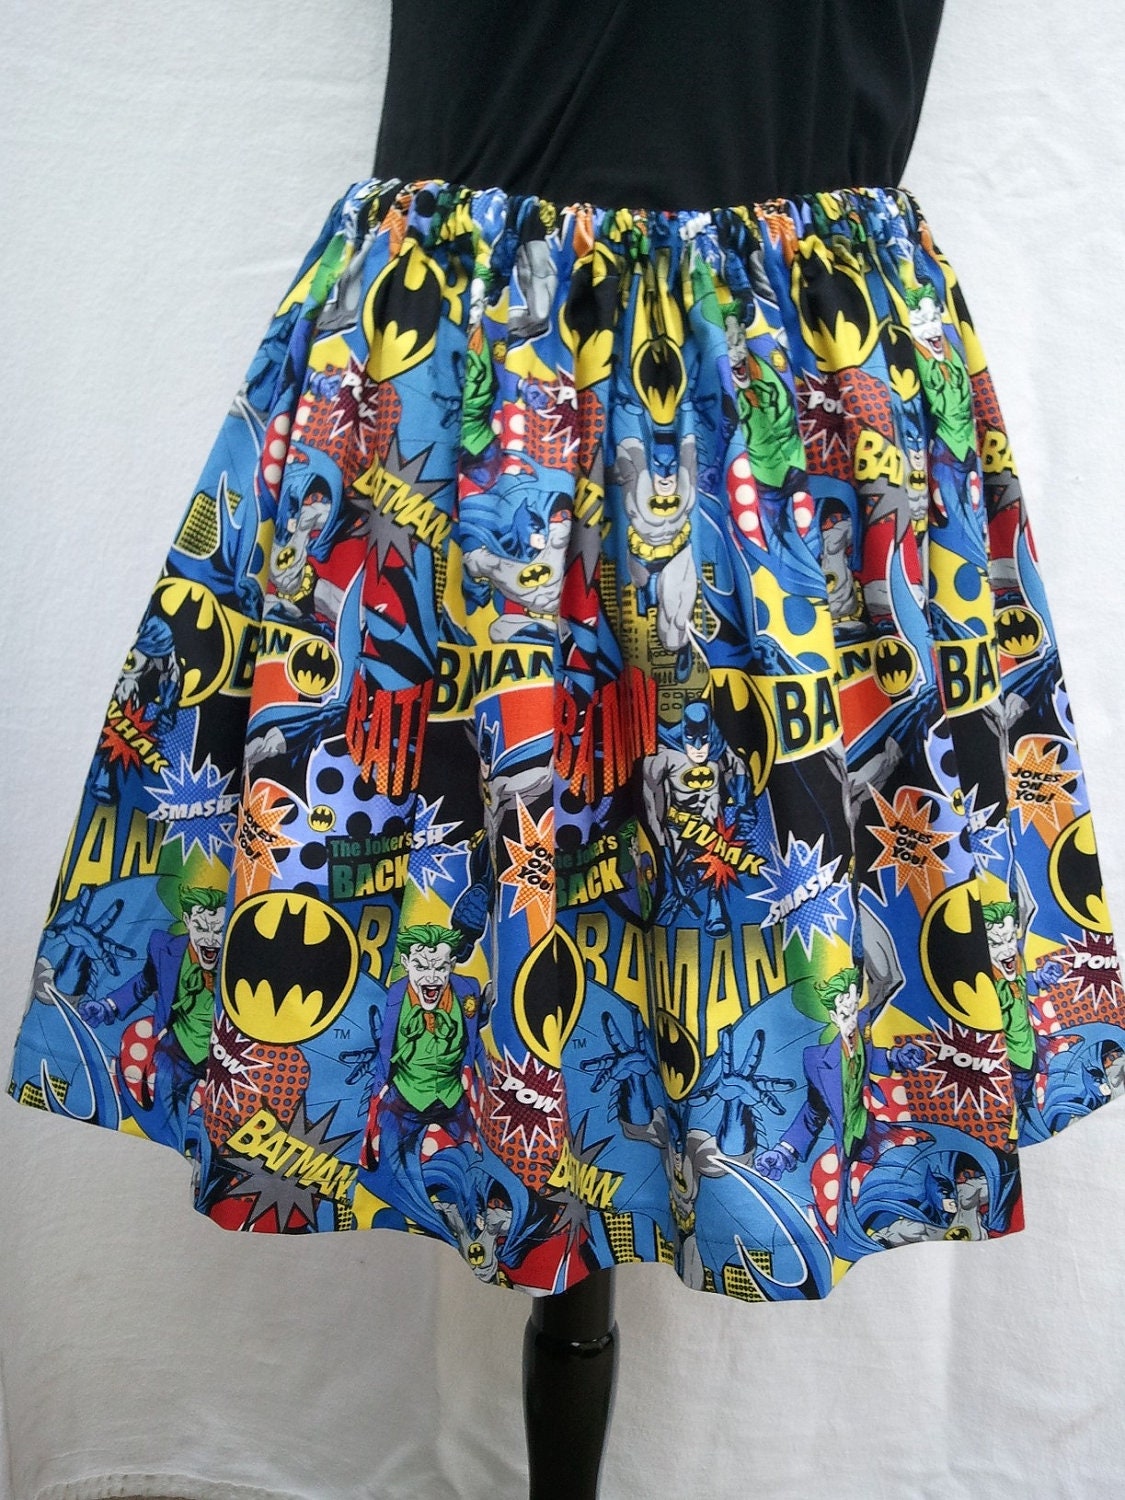 Women's Full Skirt Made From Batman Fabric Three Choices